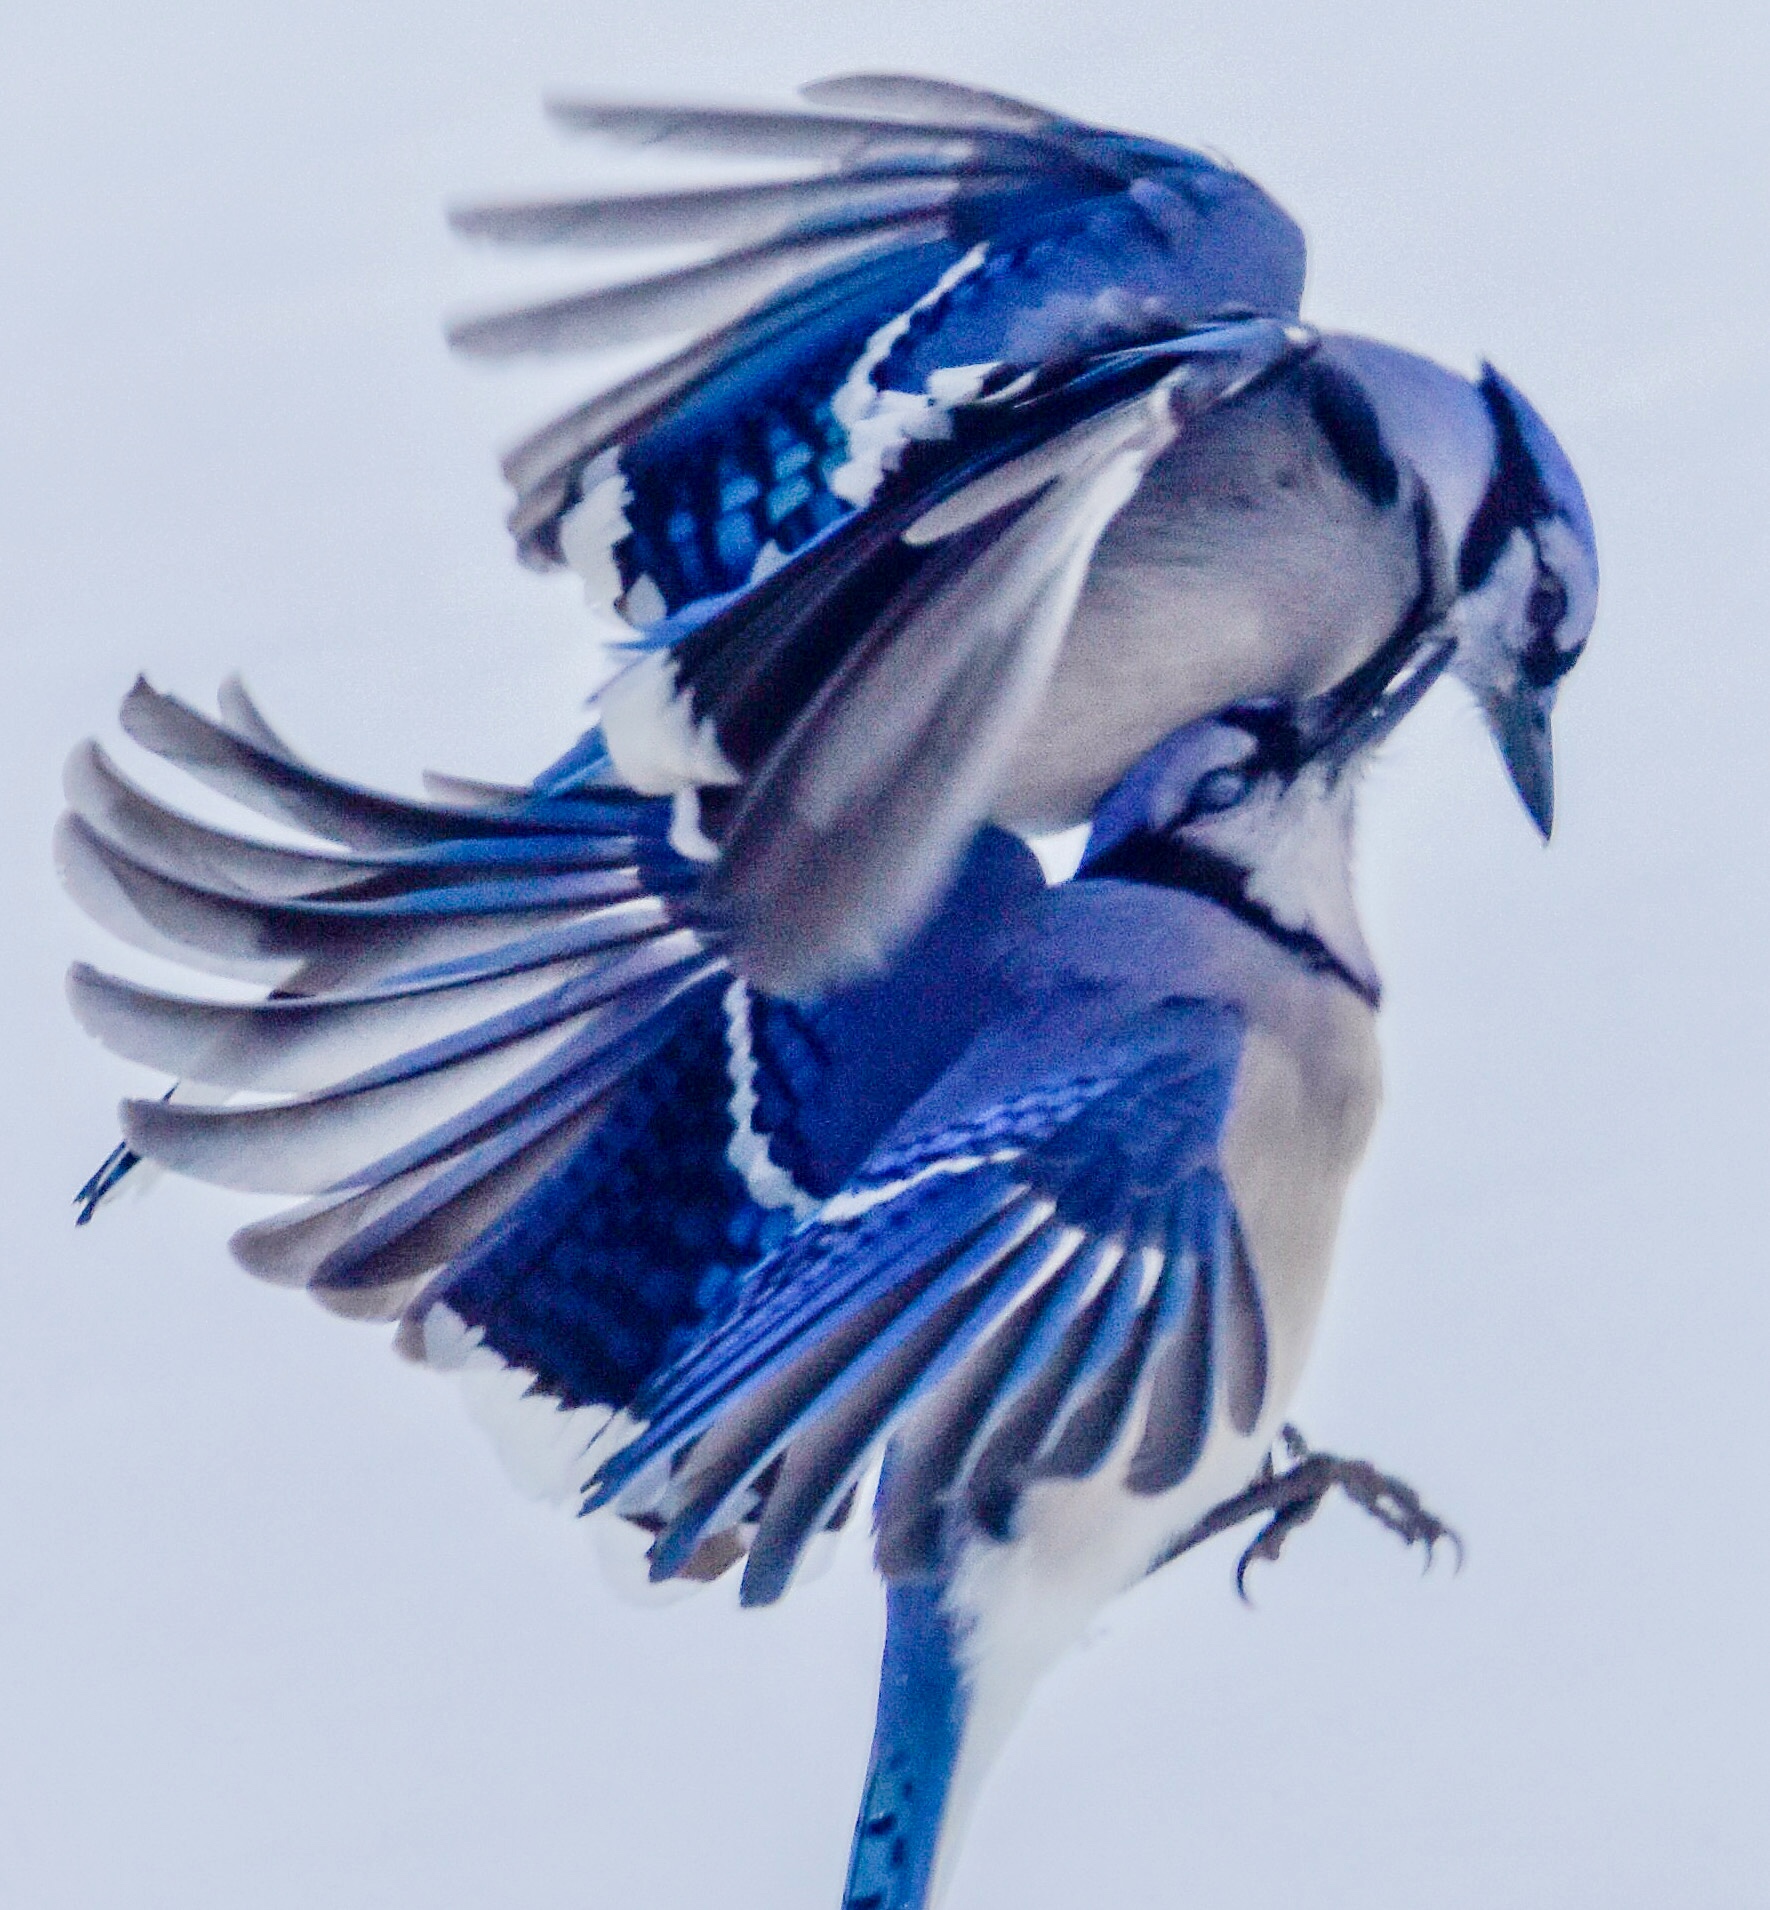 Blue Jays in Midair Collision